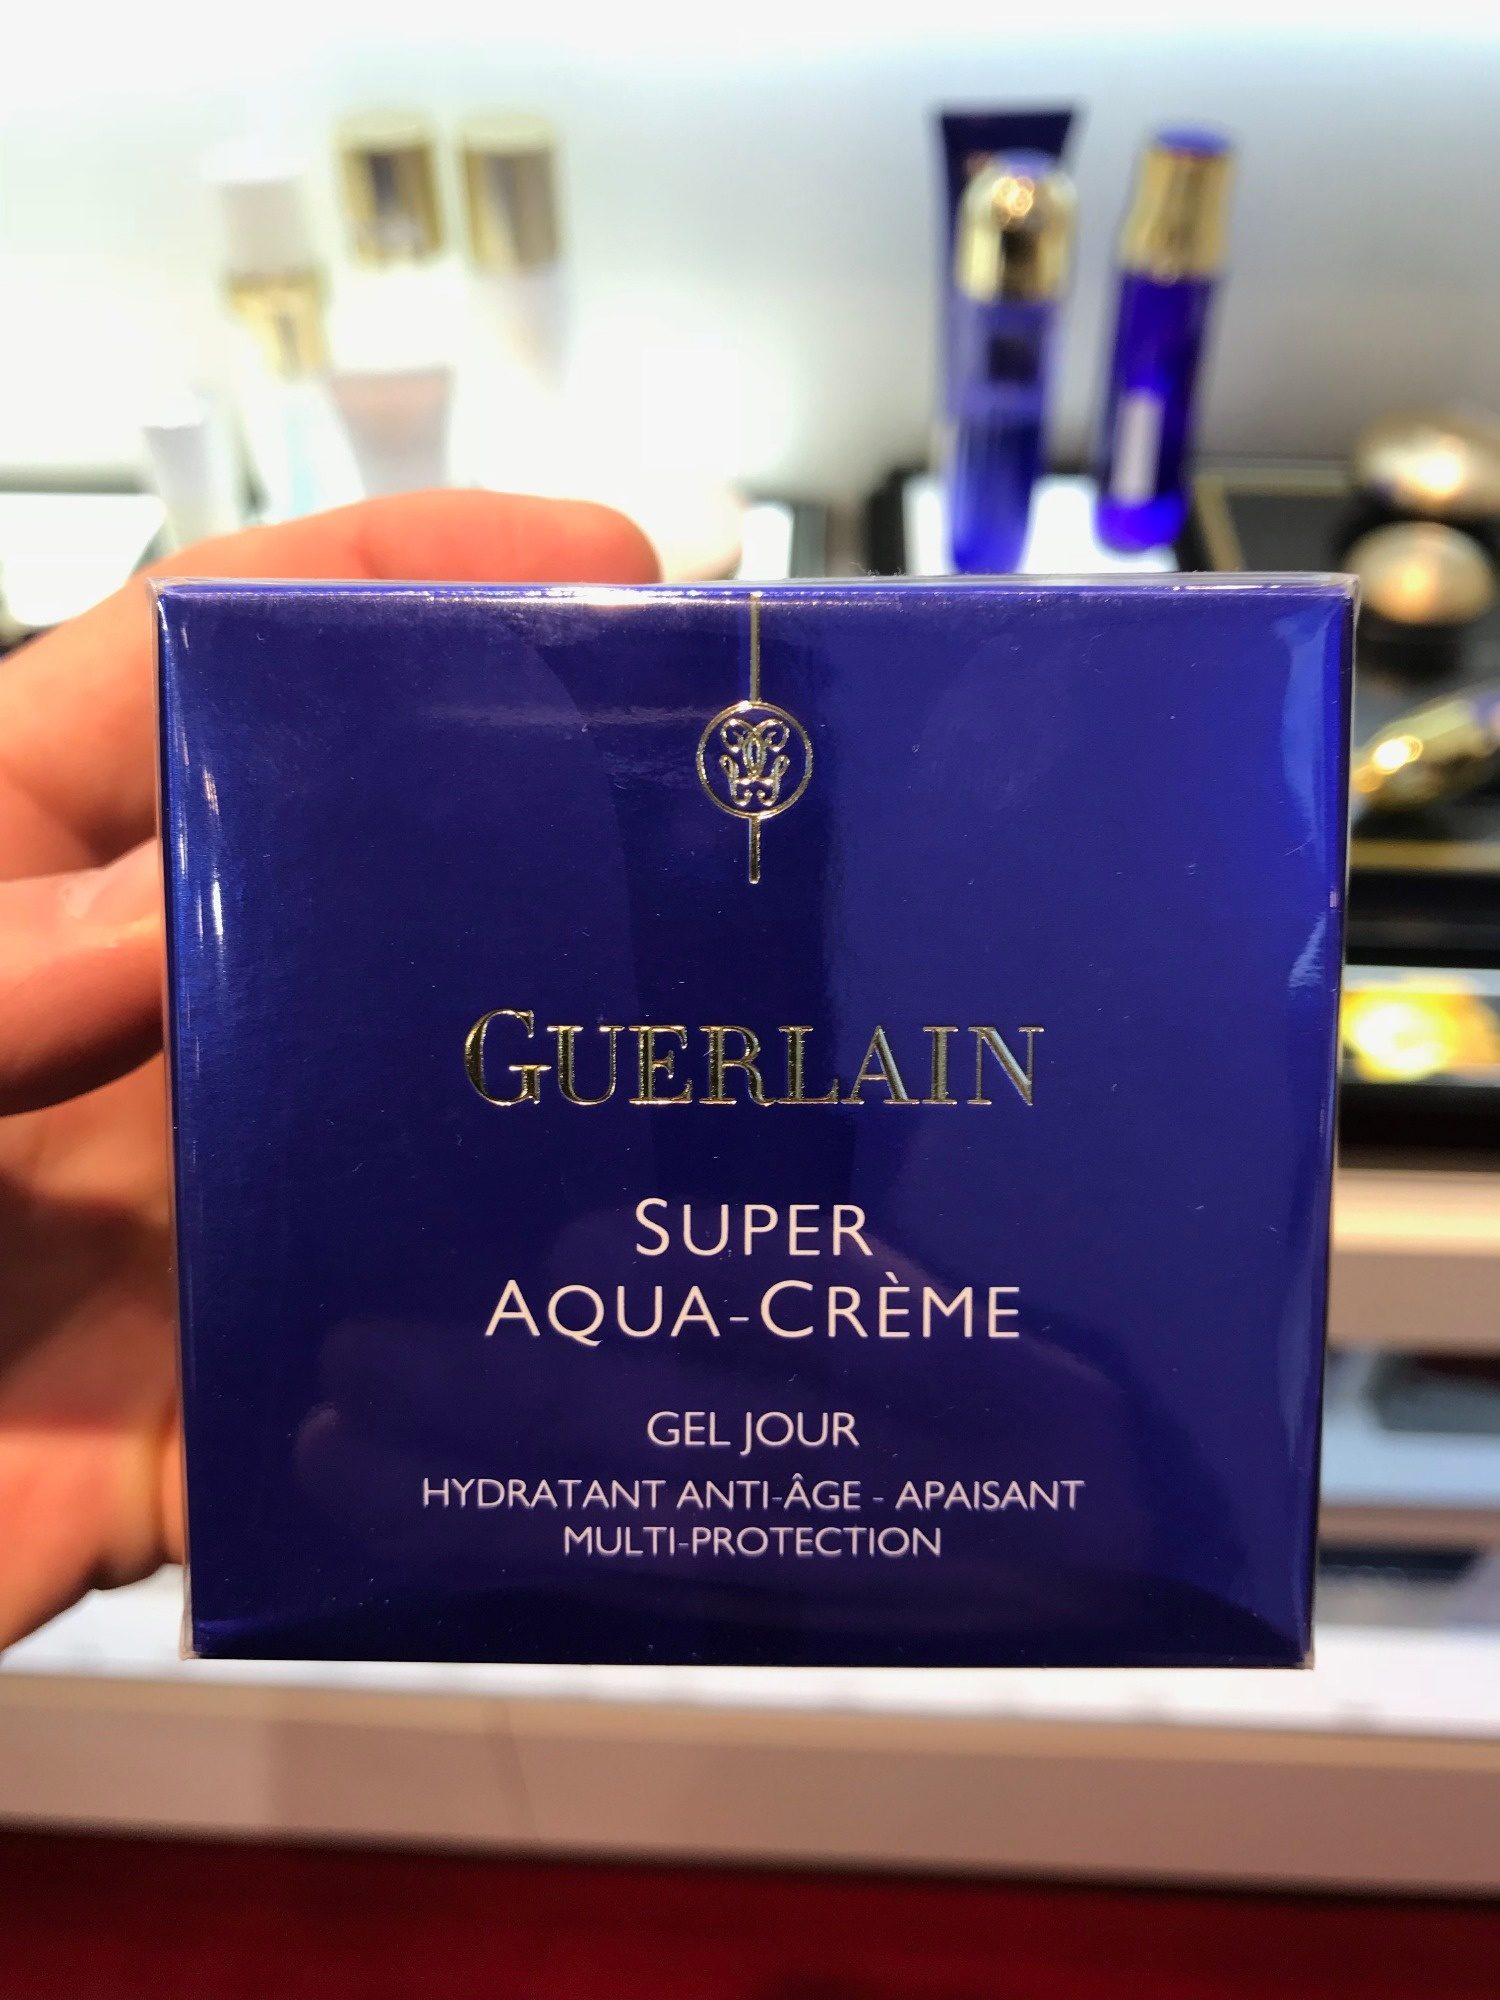 Super Aqua-Crème - Gel Jour - Ingredients - fr